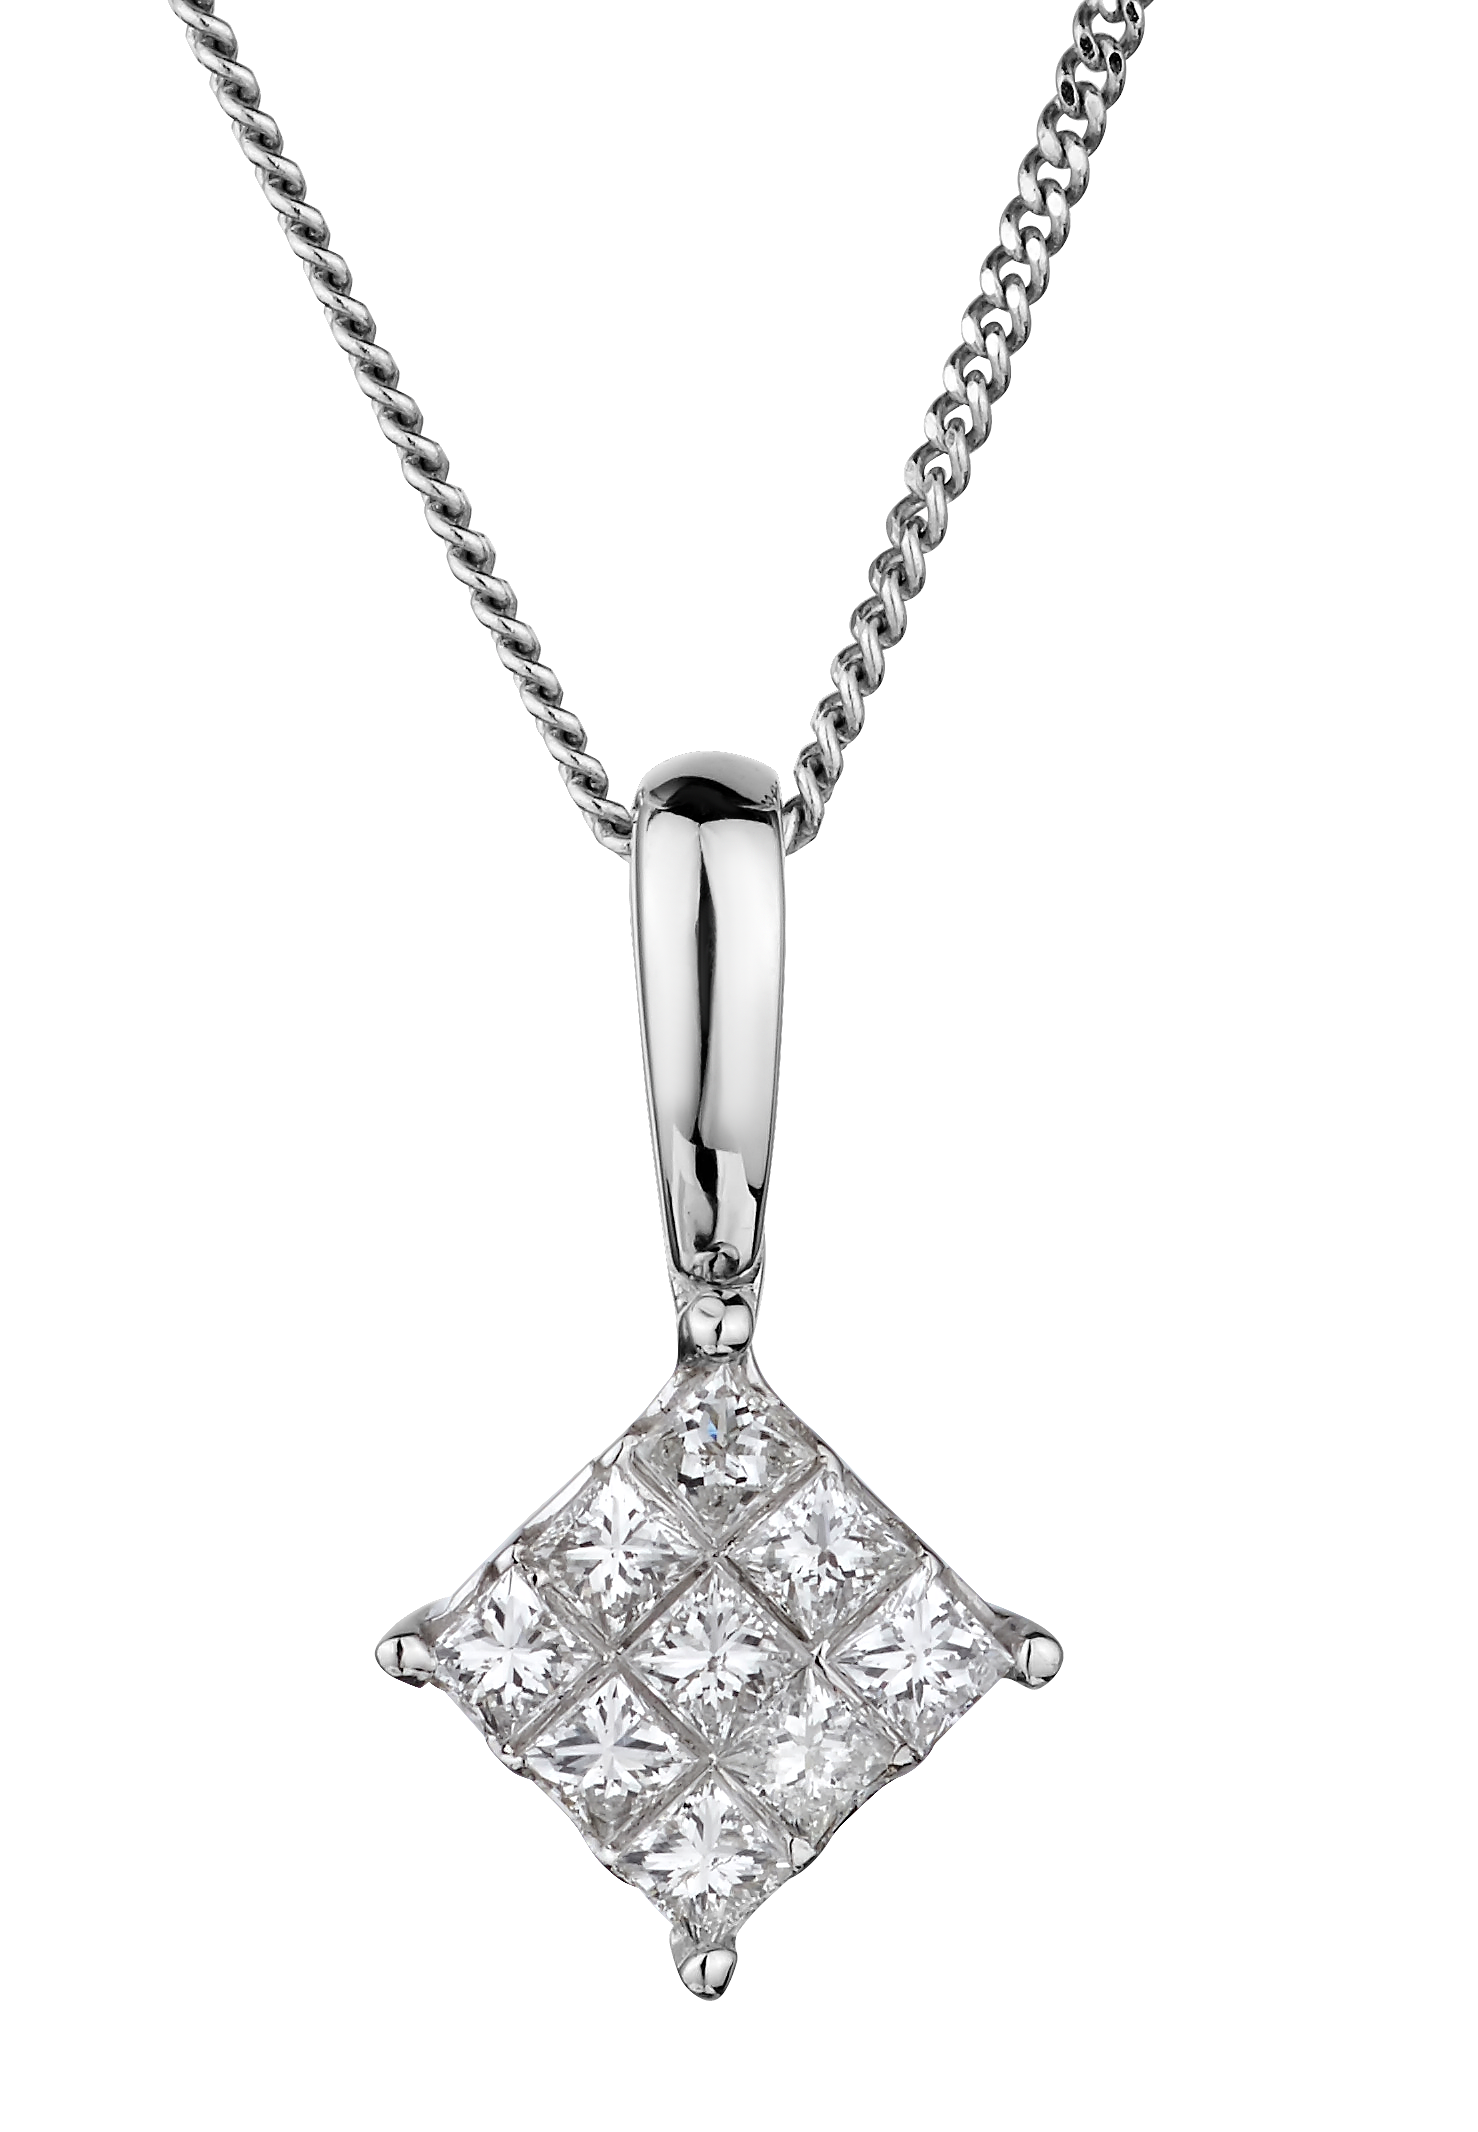 .25 Carat Princess Cut Diamond Pendant, 10kt White Gold.......................NOW